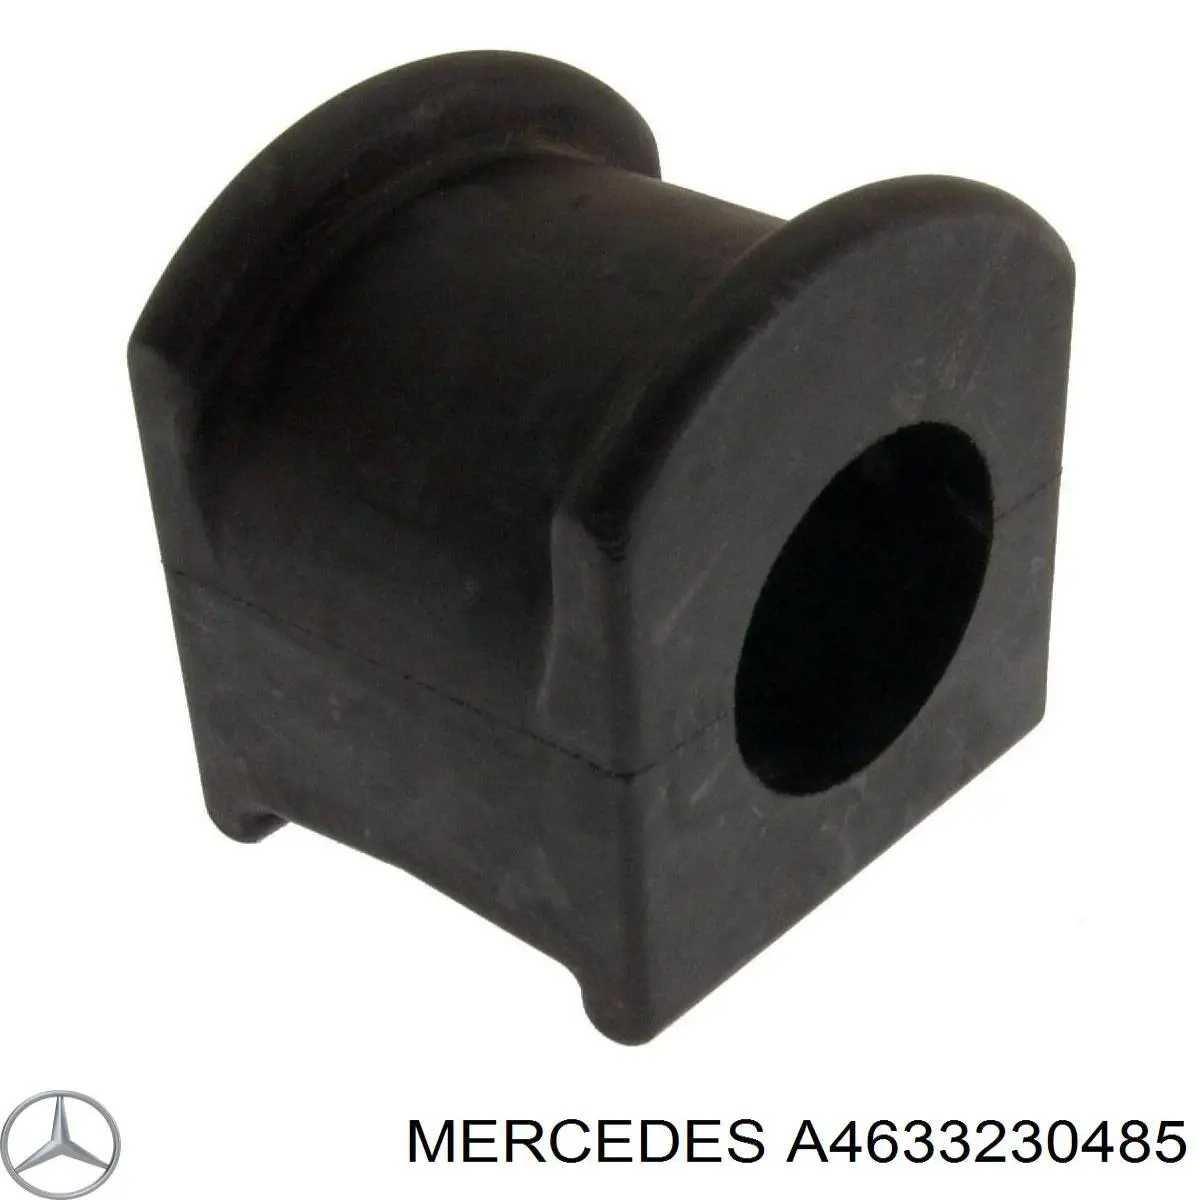 A4633230485 Mercedes bucha de suporte dianteiro de estabilizador